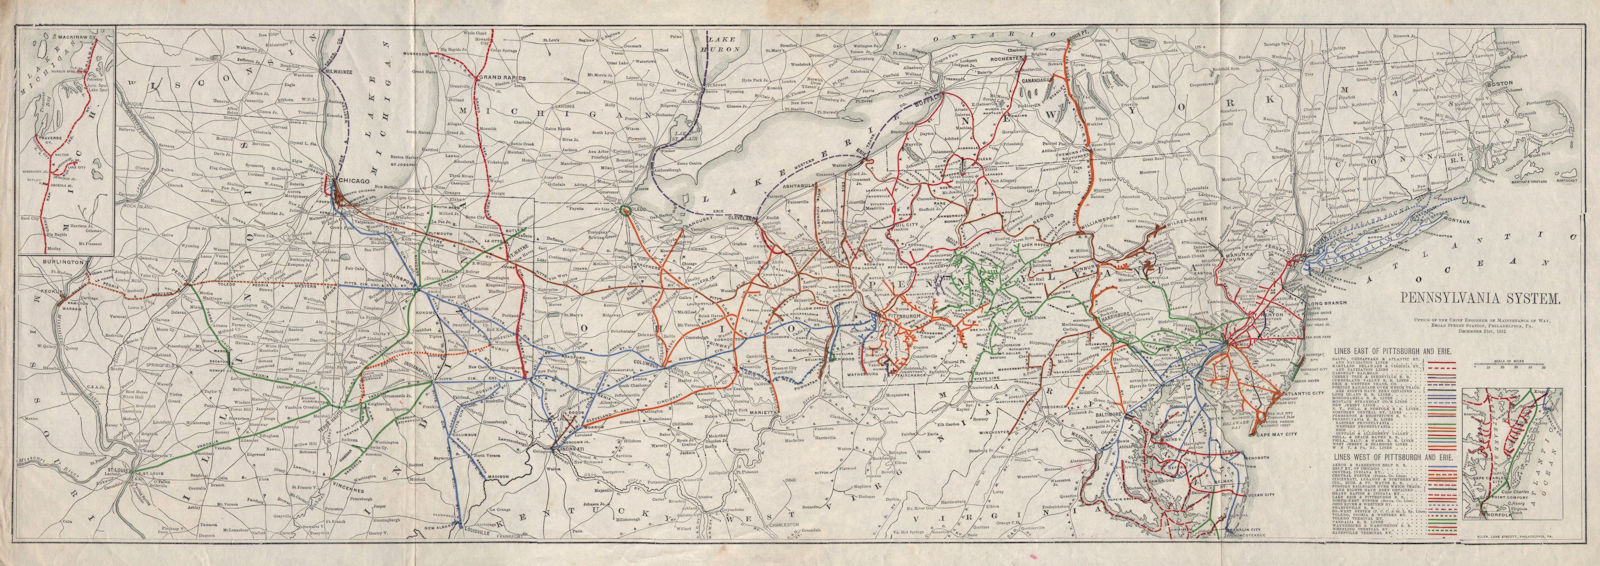 Pennsylvania Railroad System 1912 old antique vintage map plan chart